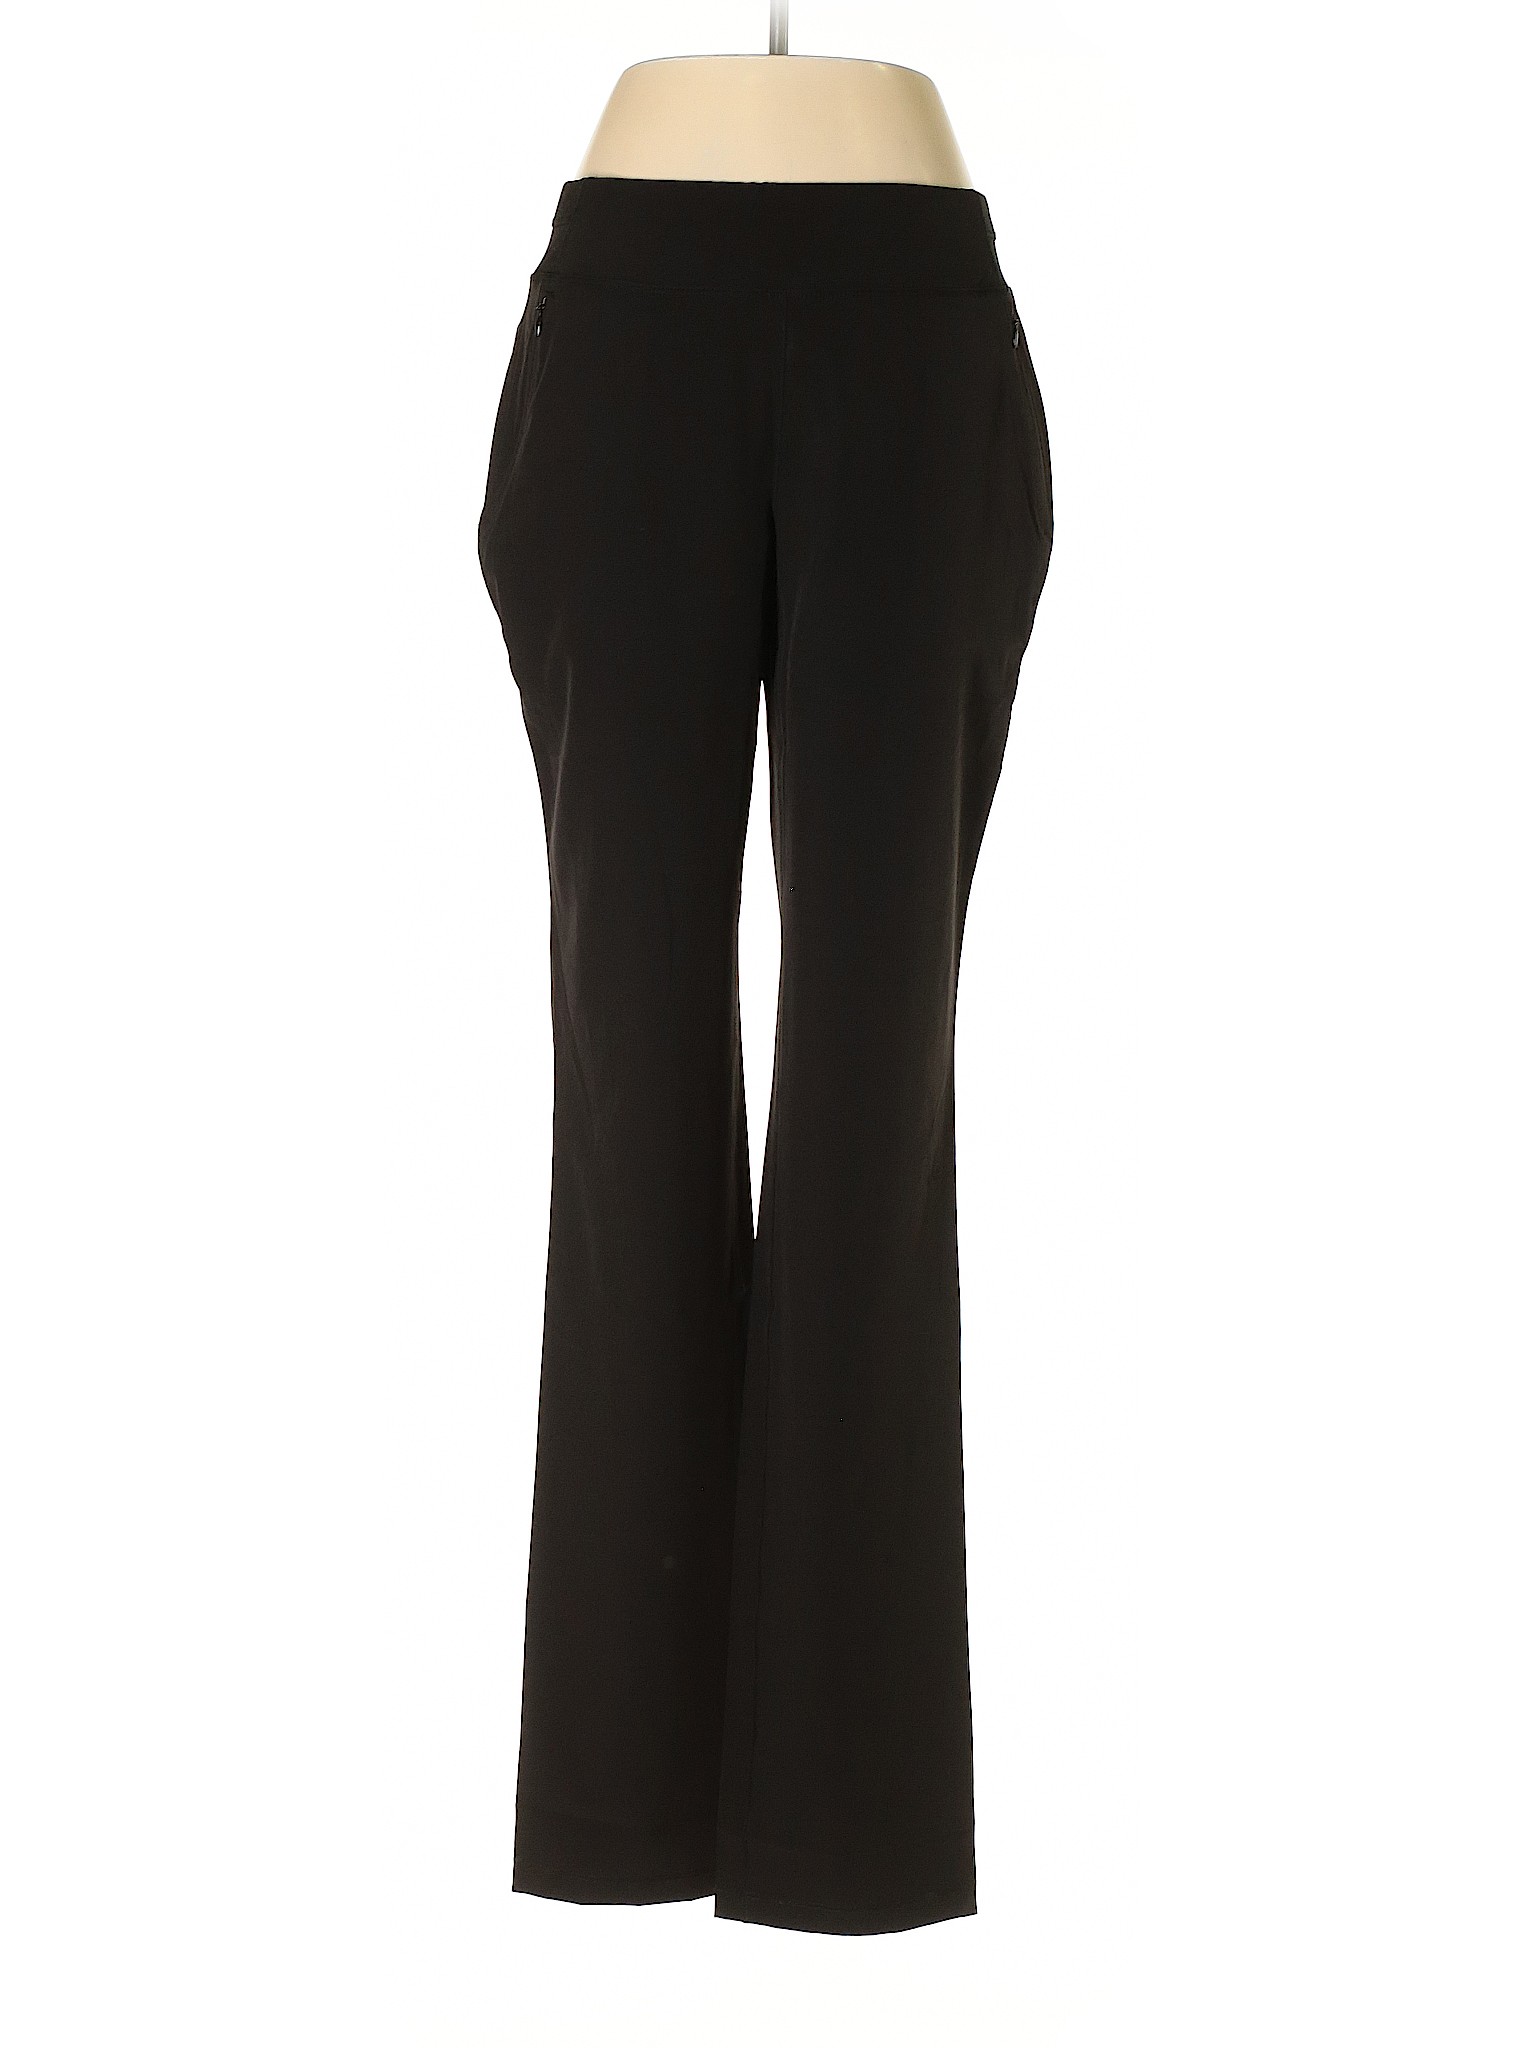 NWT Chico's Women Black Active Pants XS Tall | eBay